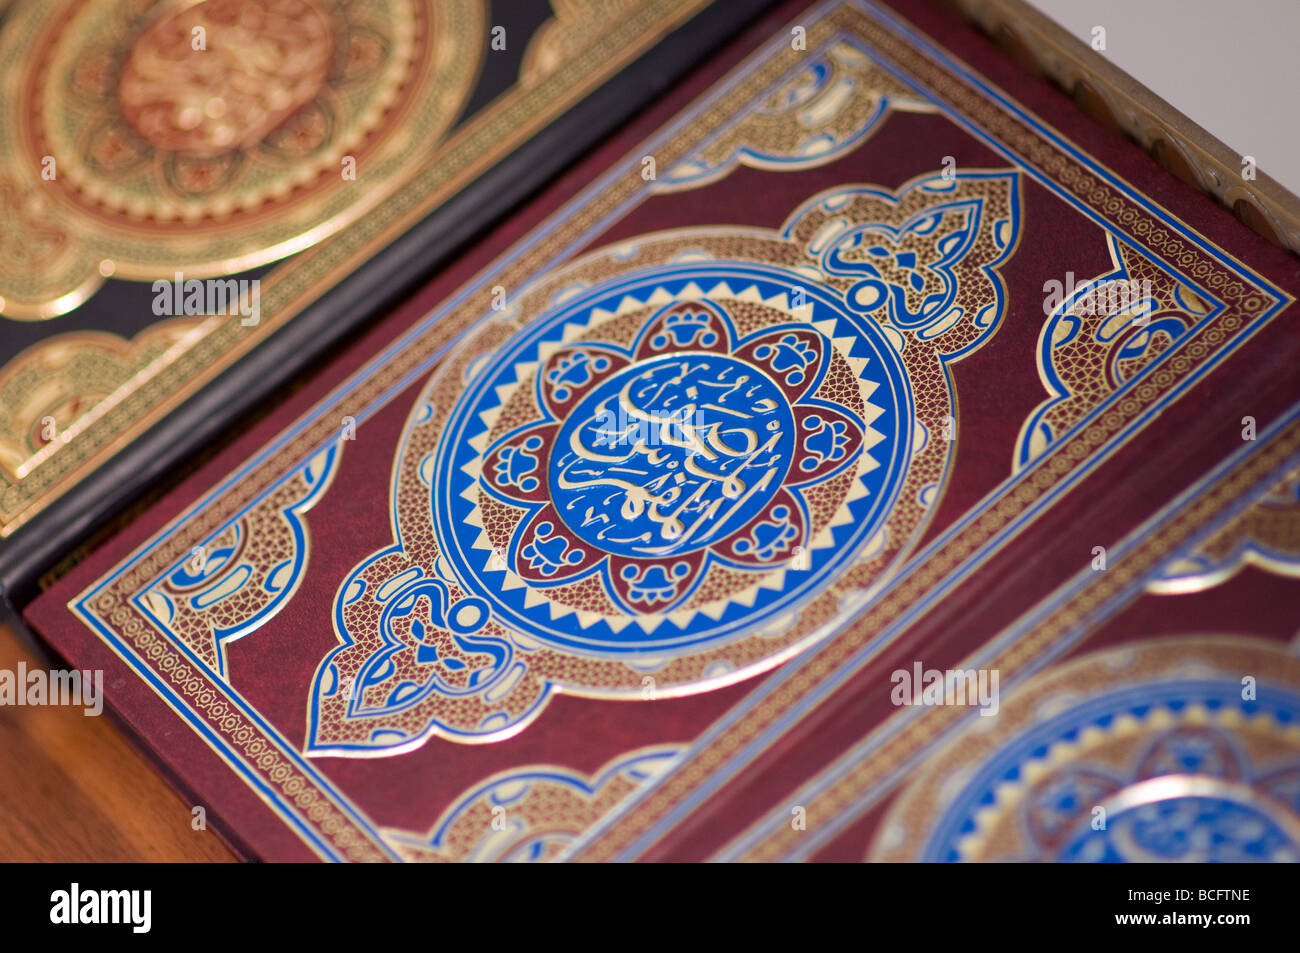 Qur'an books at Sheikh Zayed mosque, Abu Dhabi Stock Photo